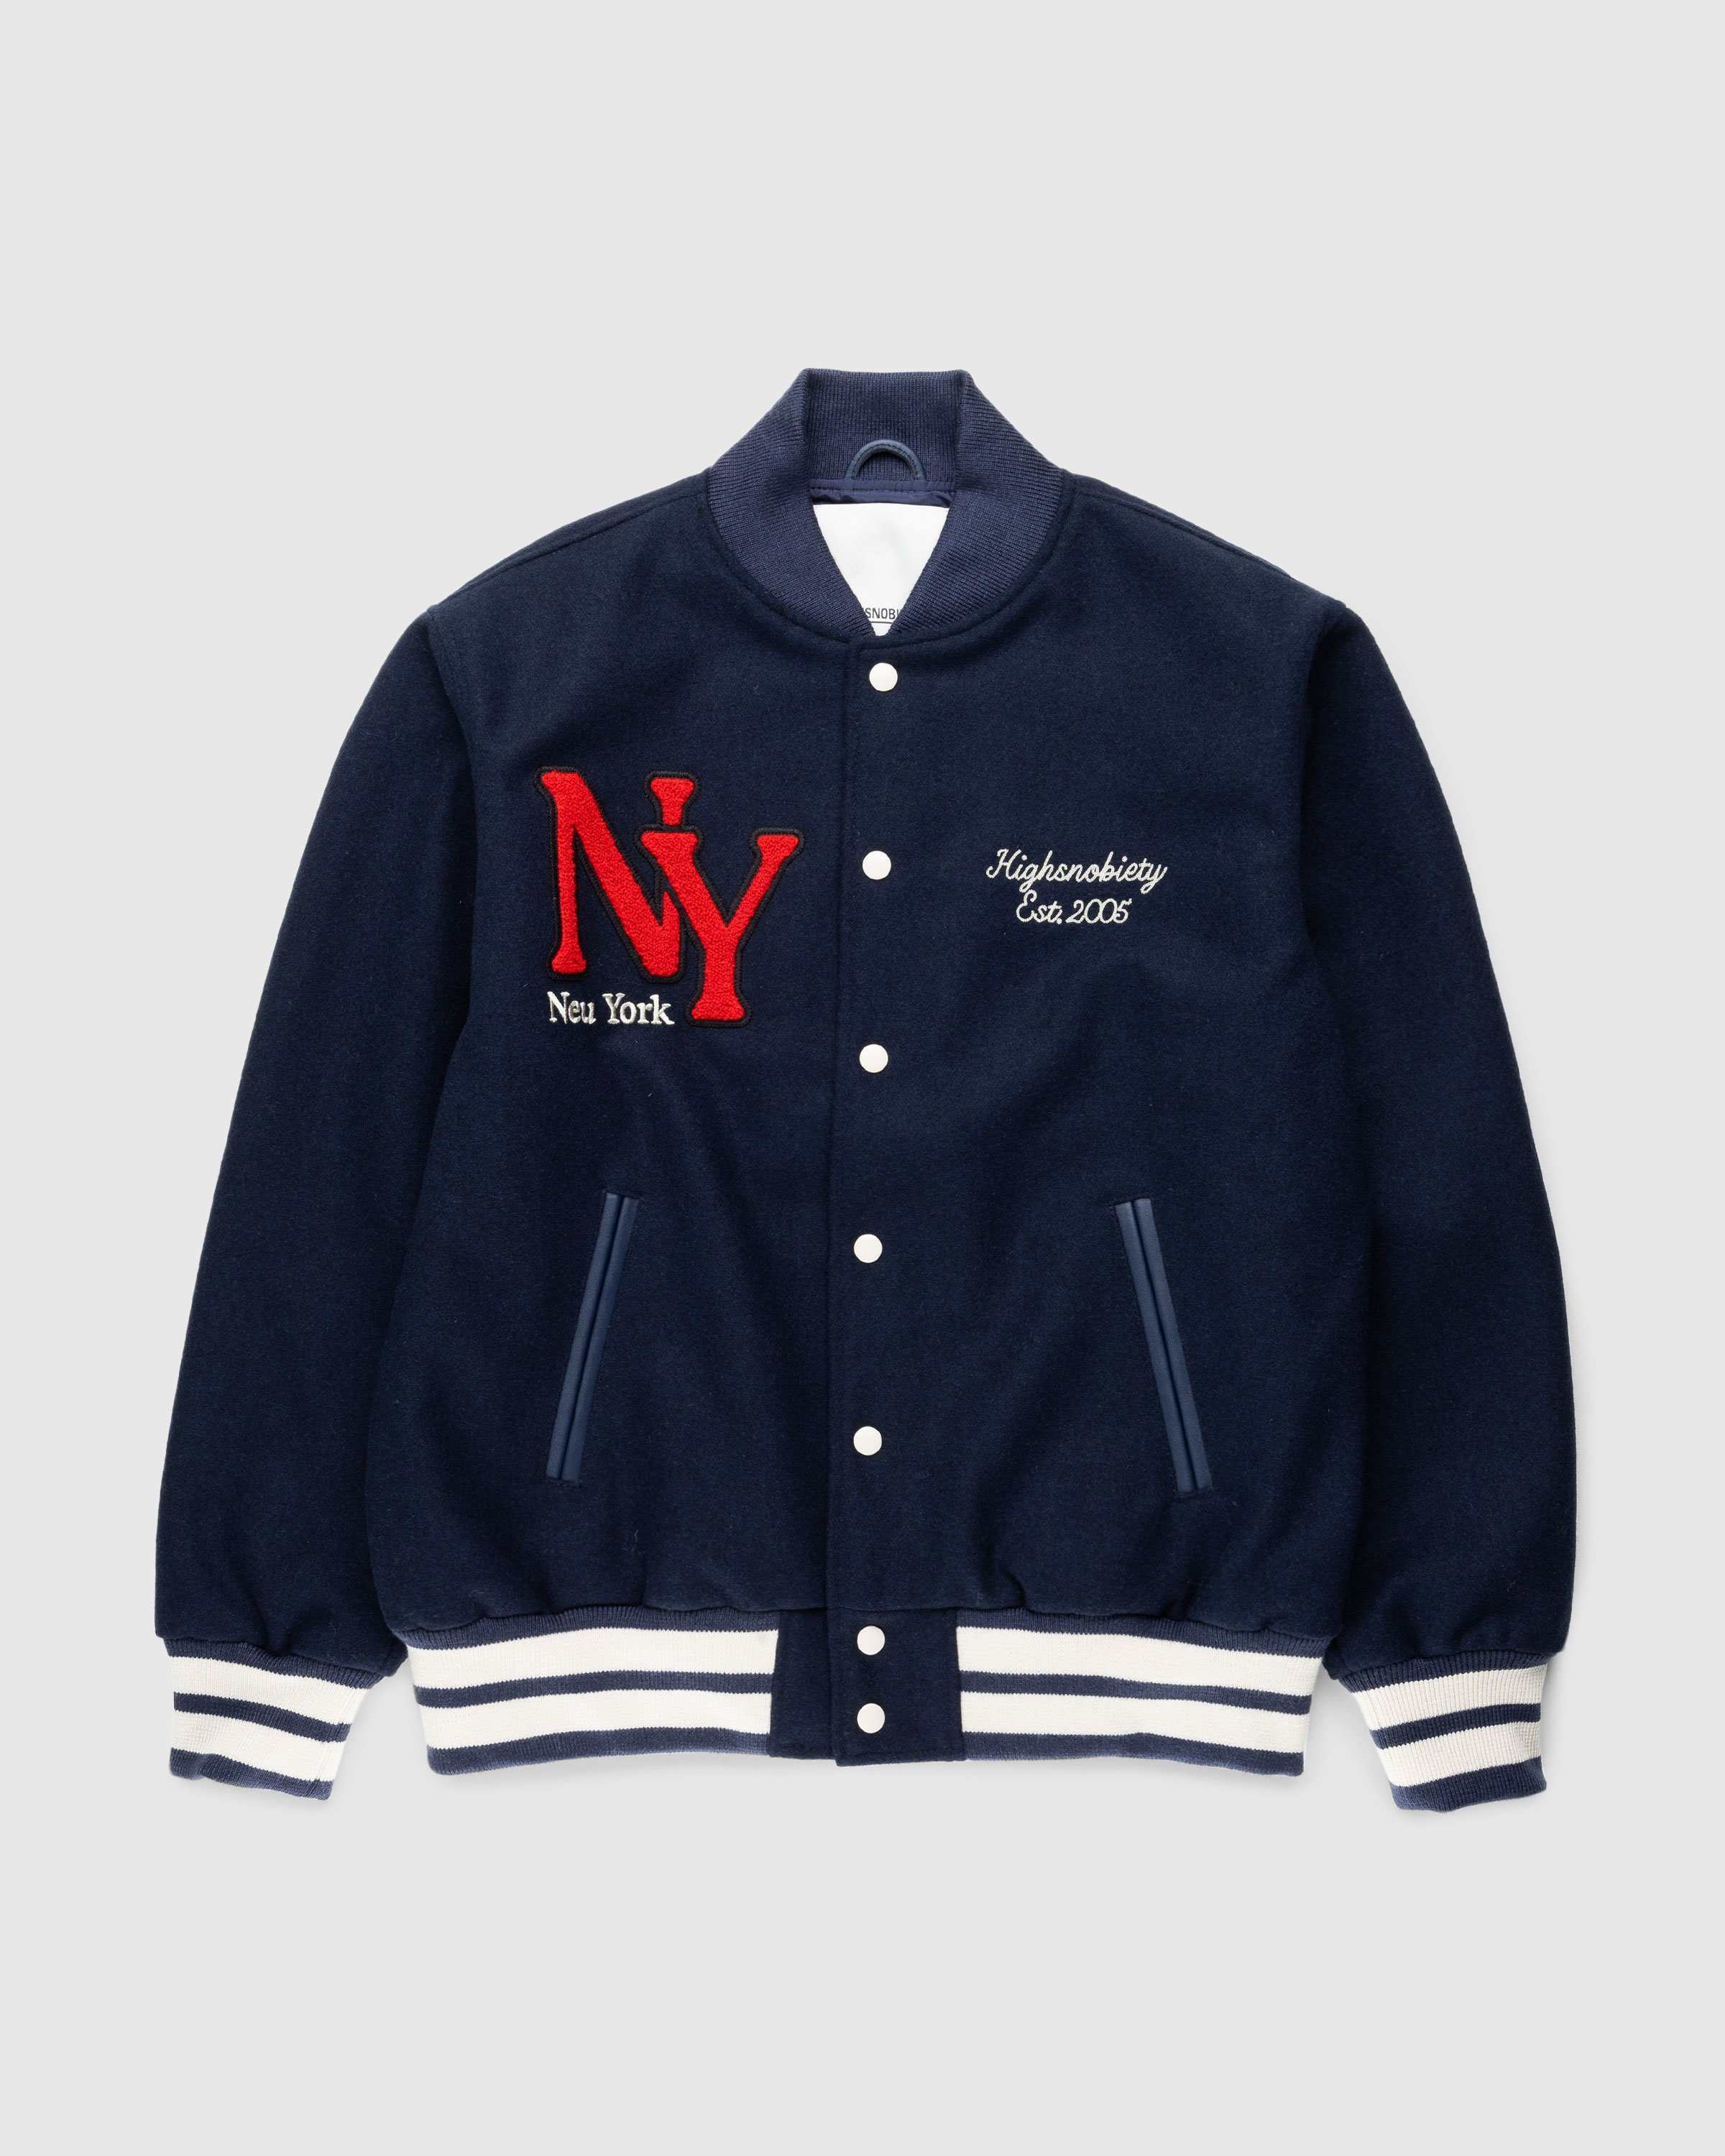 Highsnobiety - Neu York Varsity Jacket - Clothing - Blue - Image 2